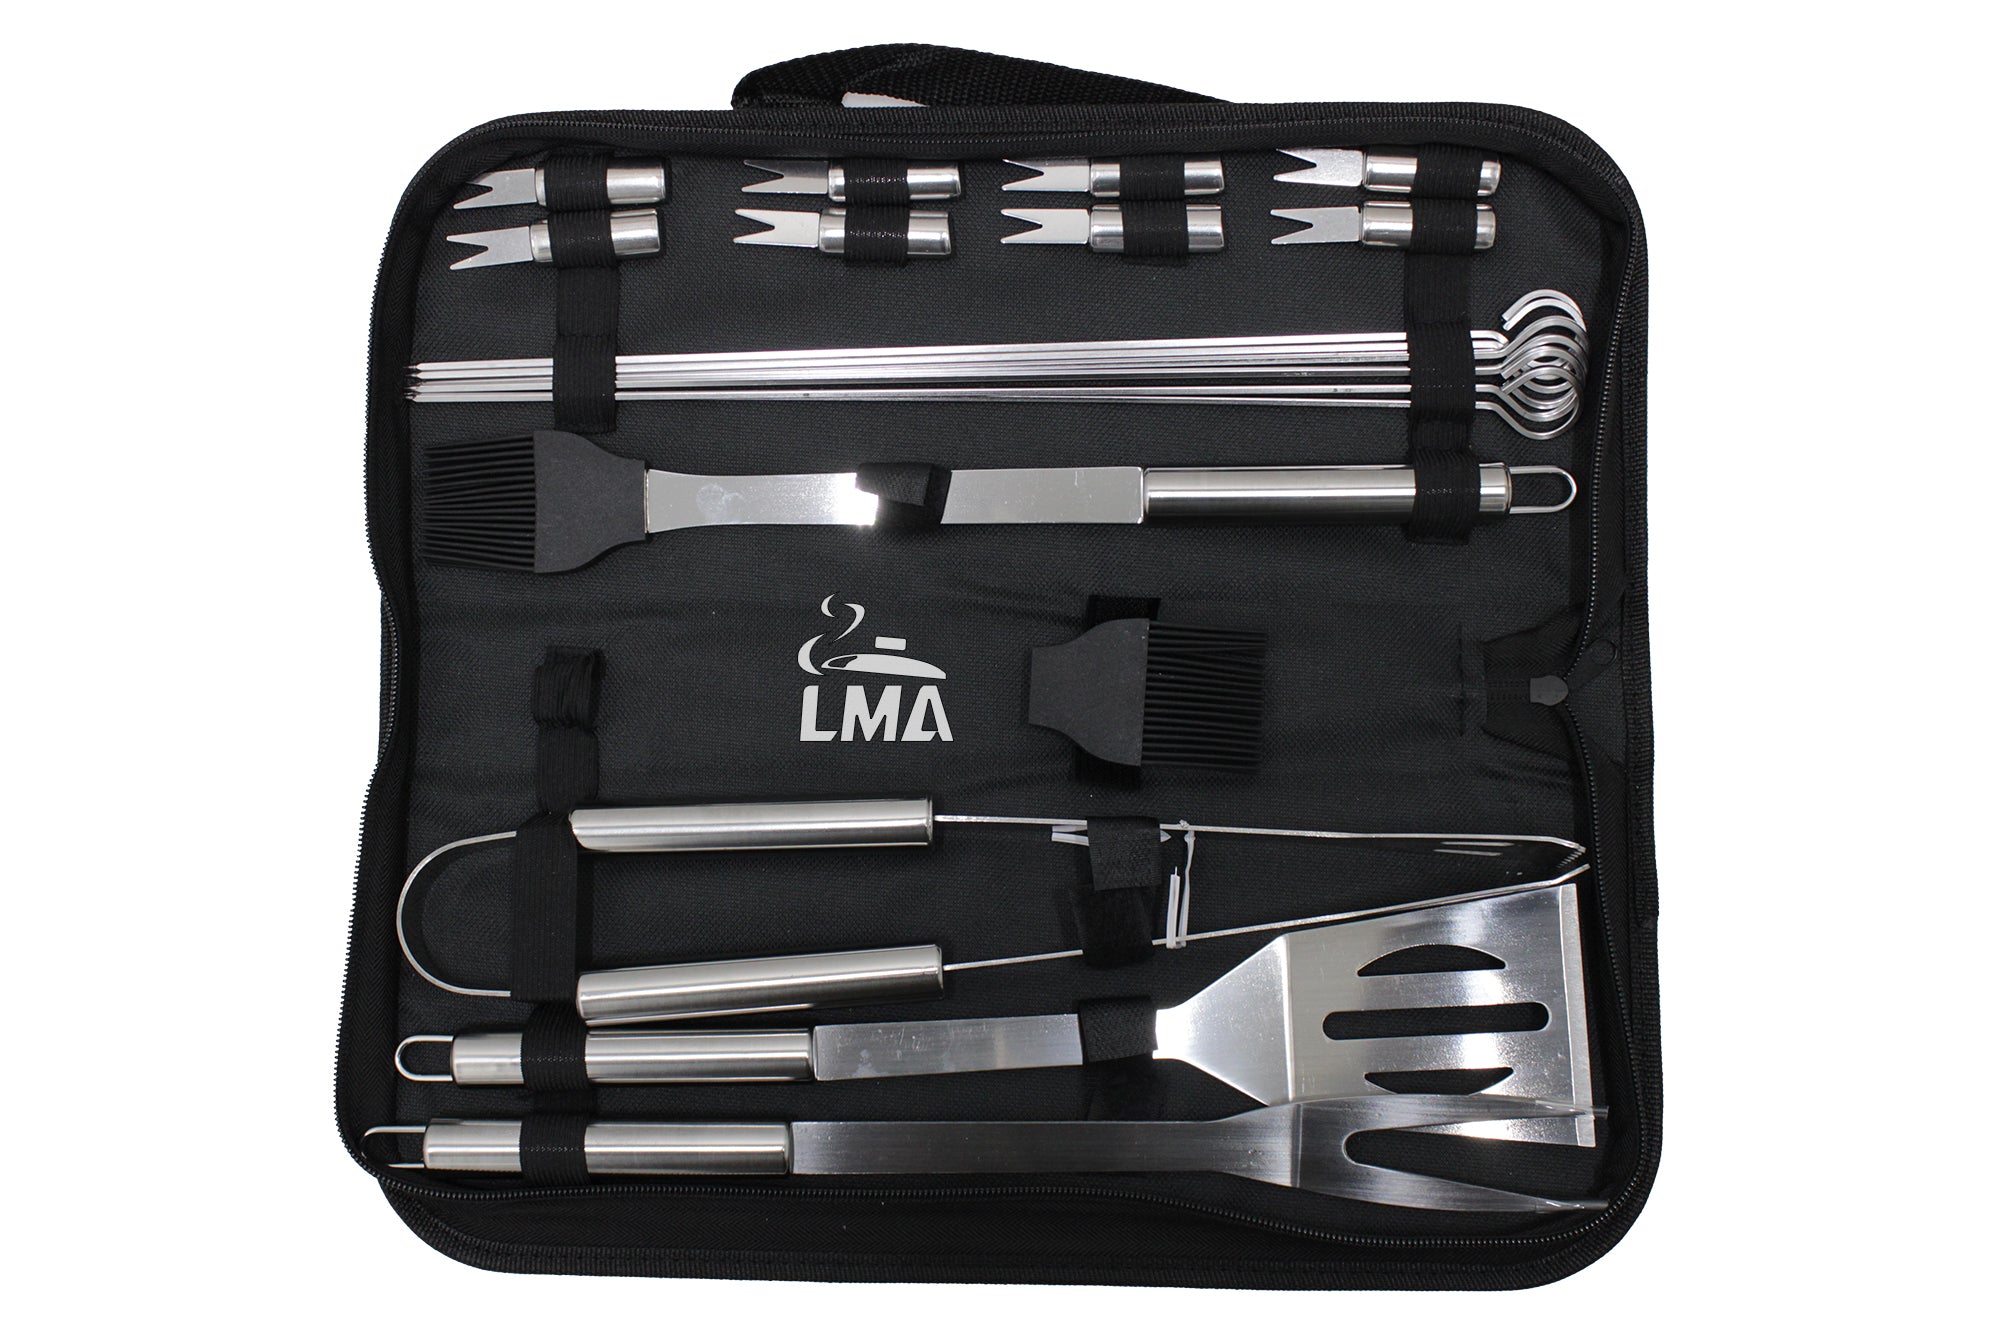 LMA Braai Master Stainless Steel 20 Piece Utensil Set in Carry & Basting Brushes